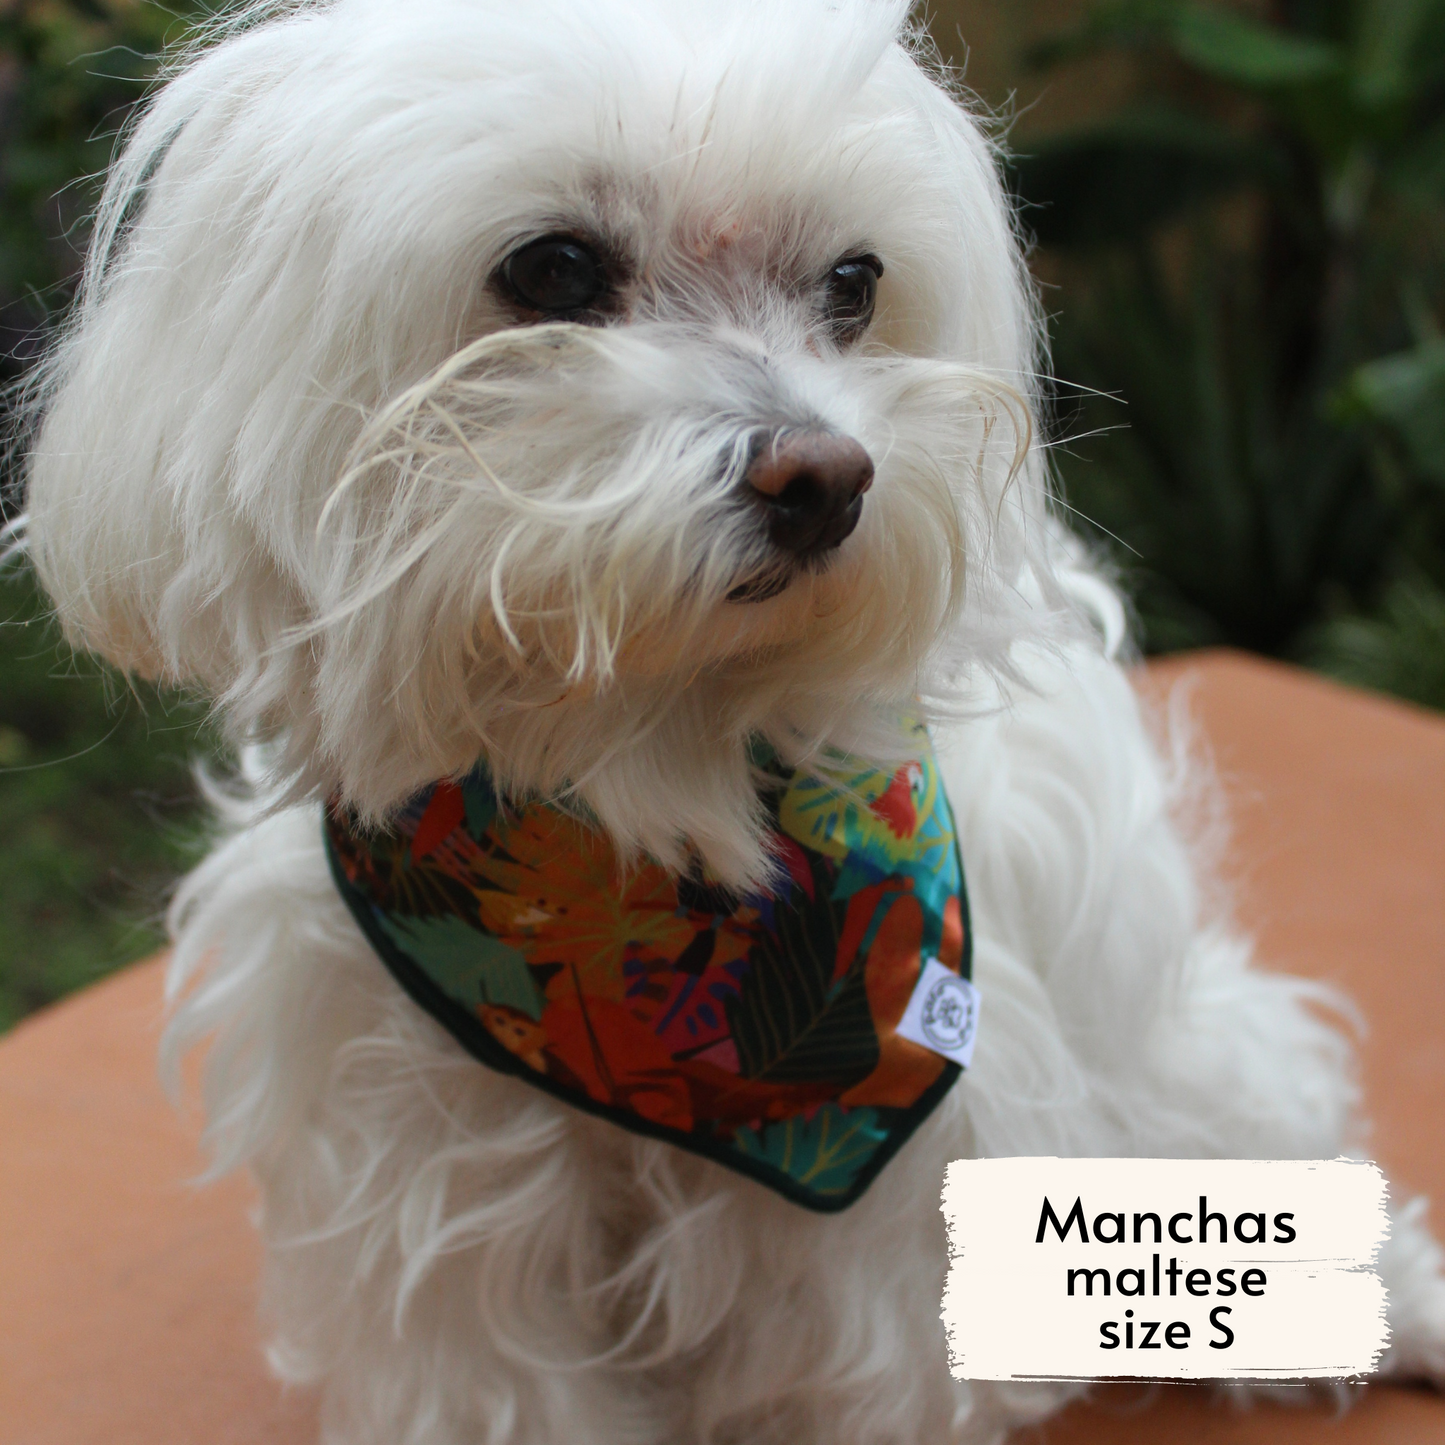 Pata Paw Costa Rican rainforest bandana as seen on a small dog, Manchas, a maltese